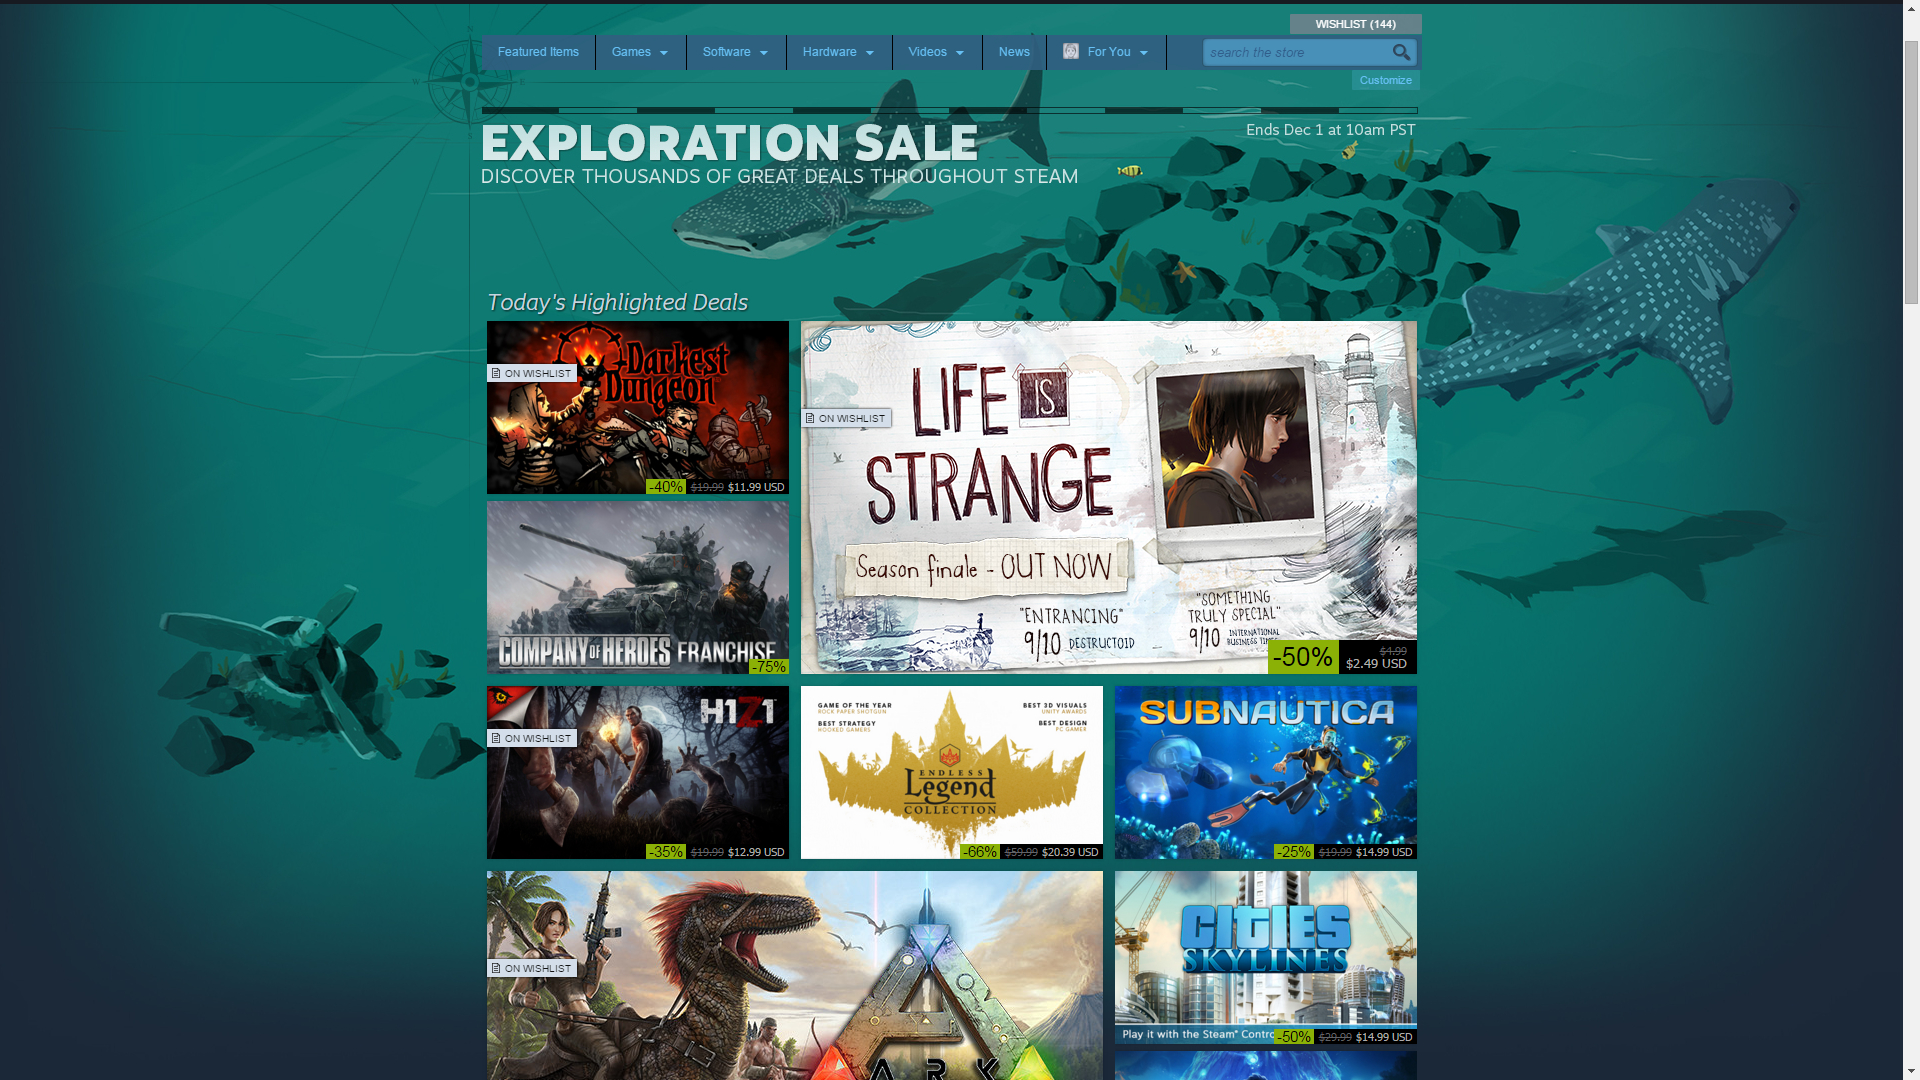 Khuyến mãi Exploration Sales trên Steam: Thiếu sự hấp dẫn